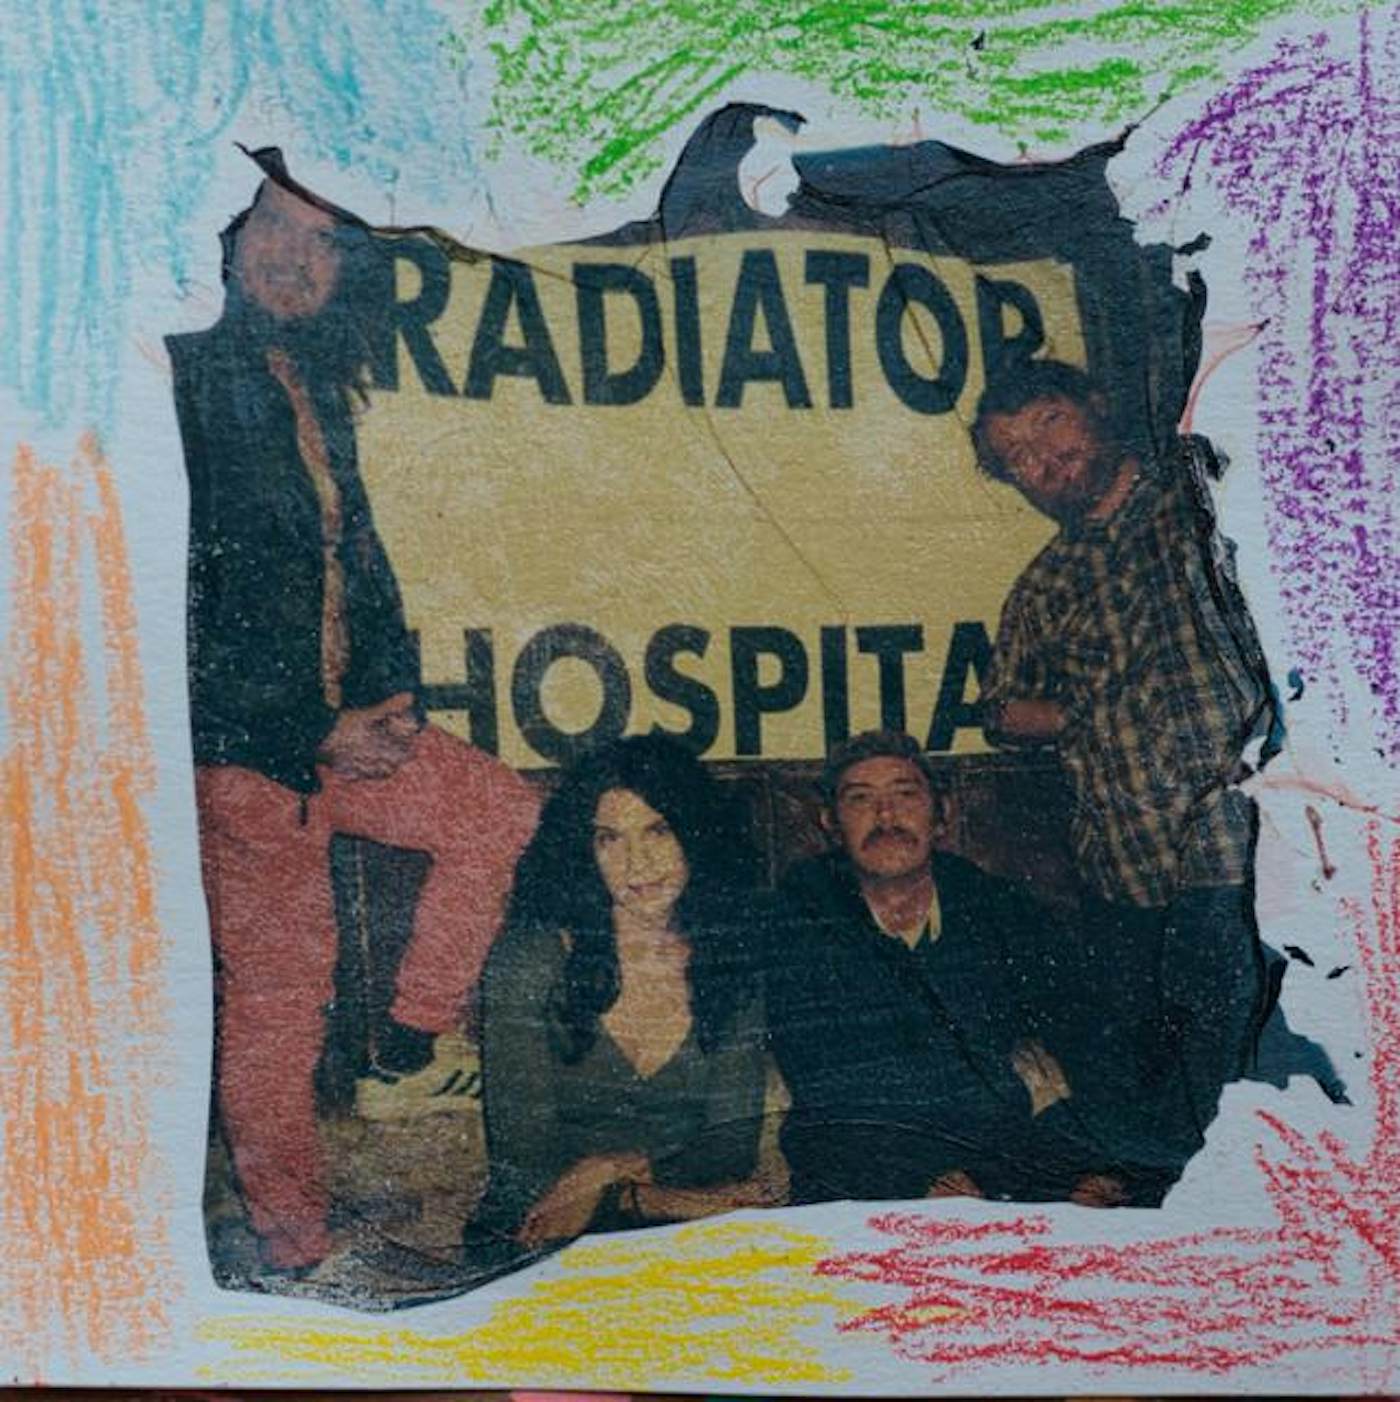 Radiator Hospital